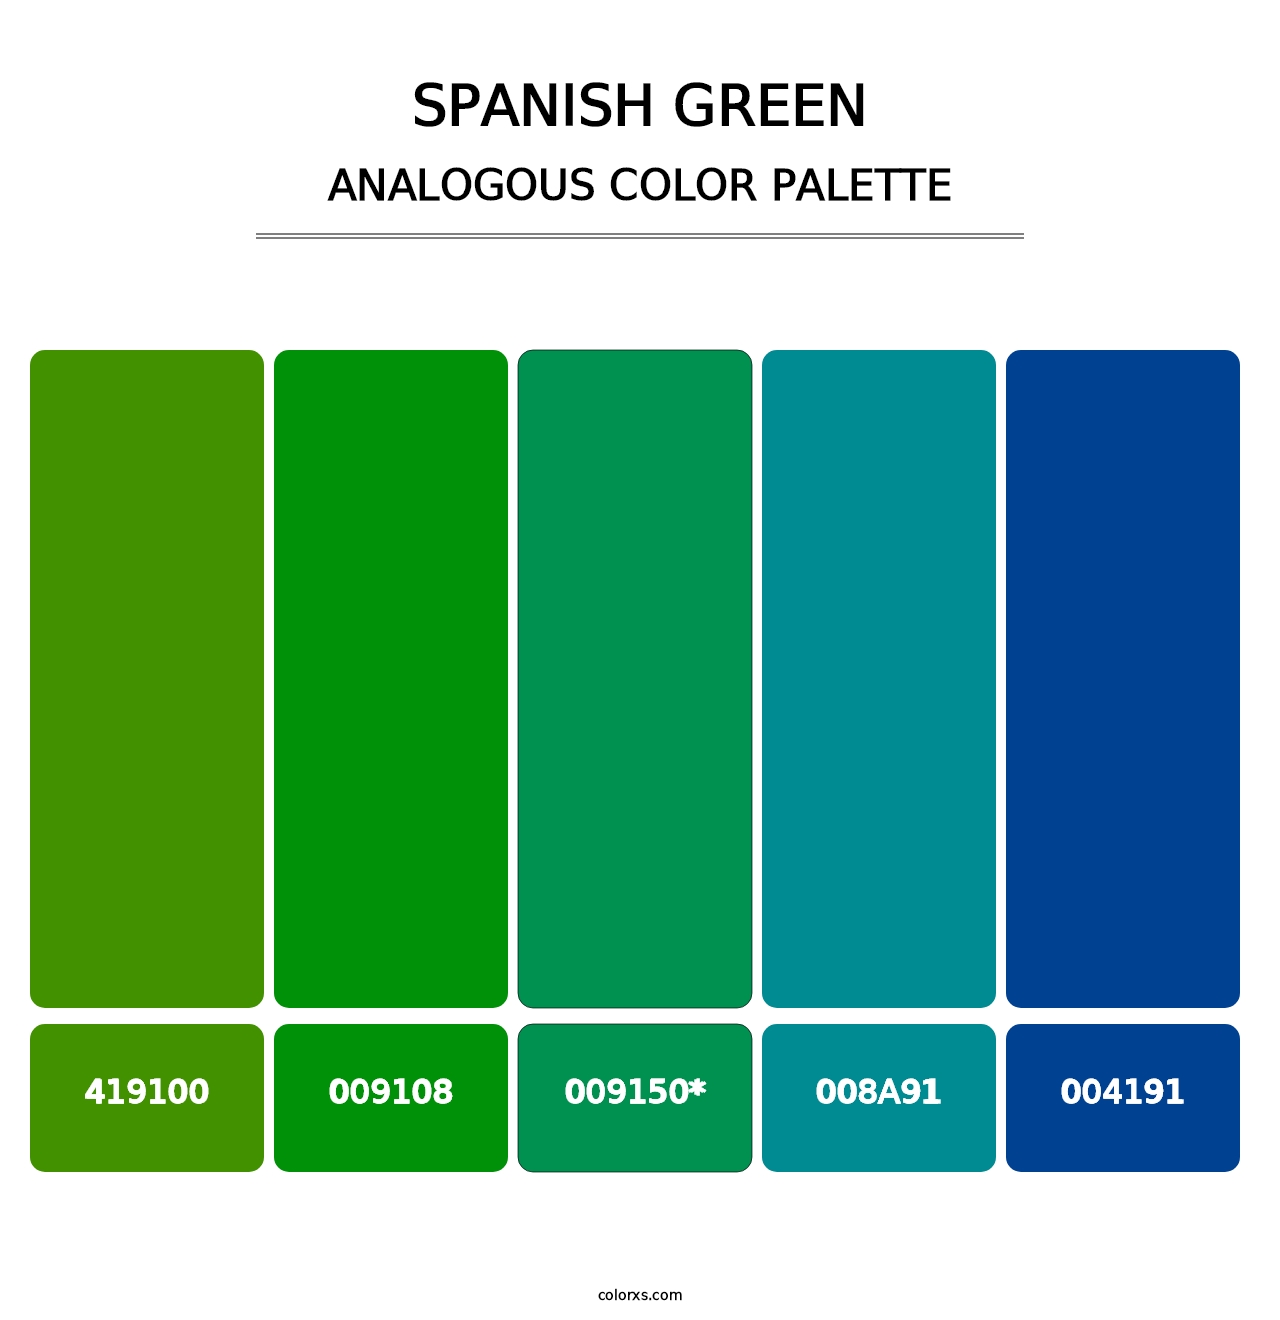 Spanish Green - Analogous Color Palette